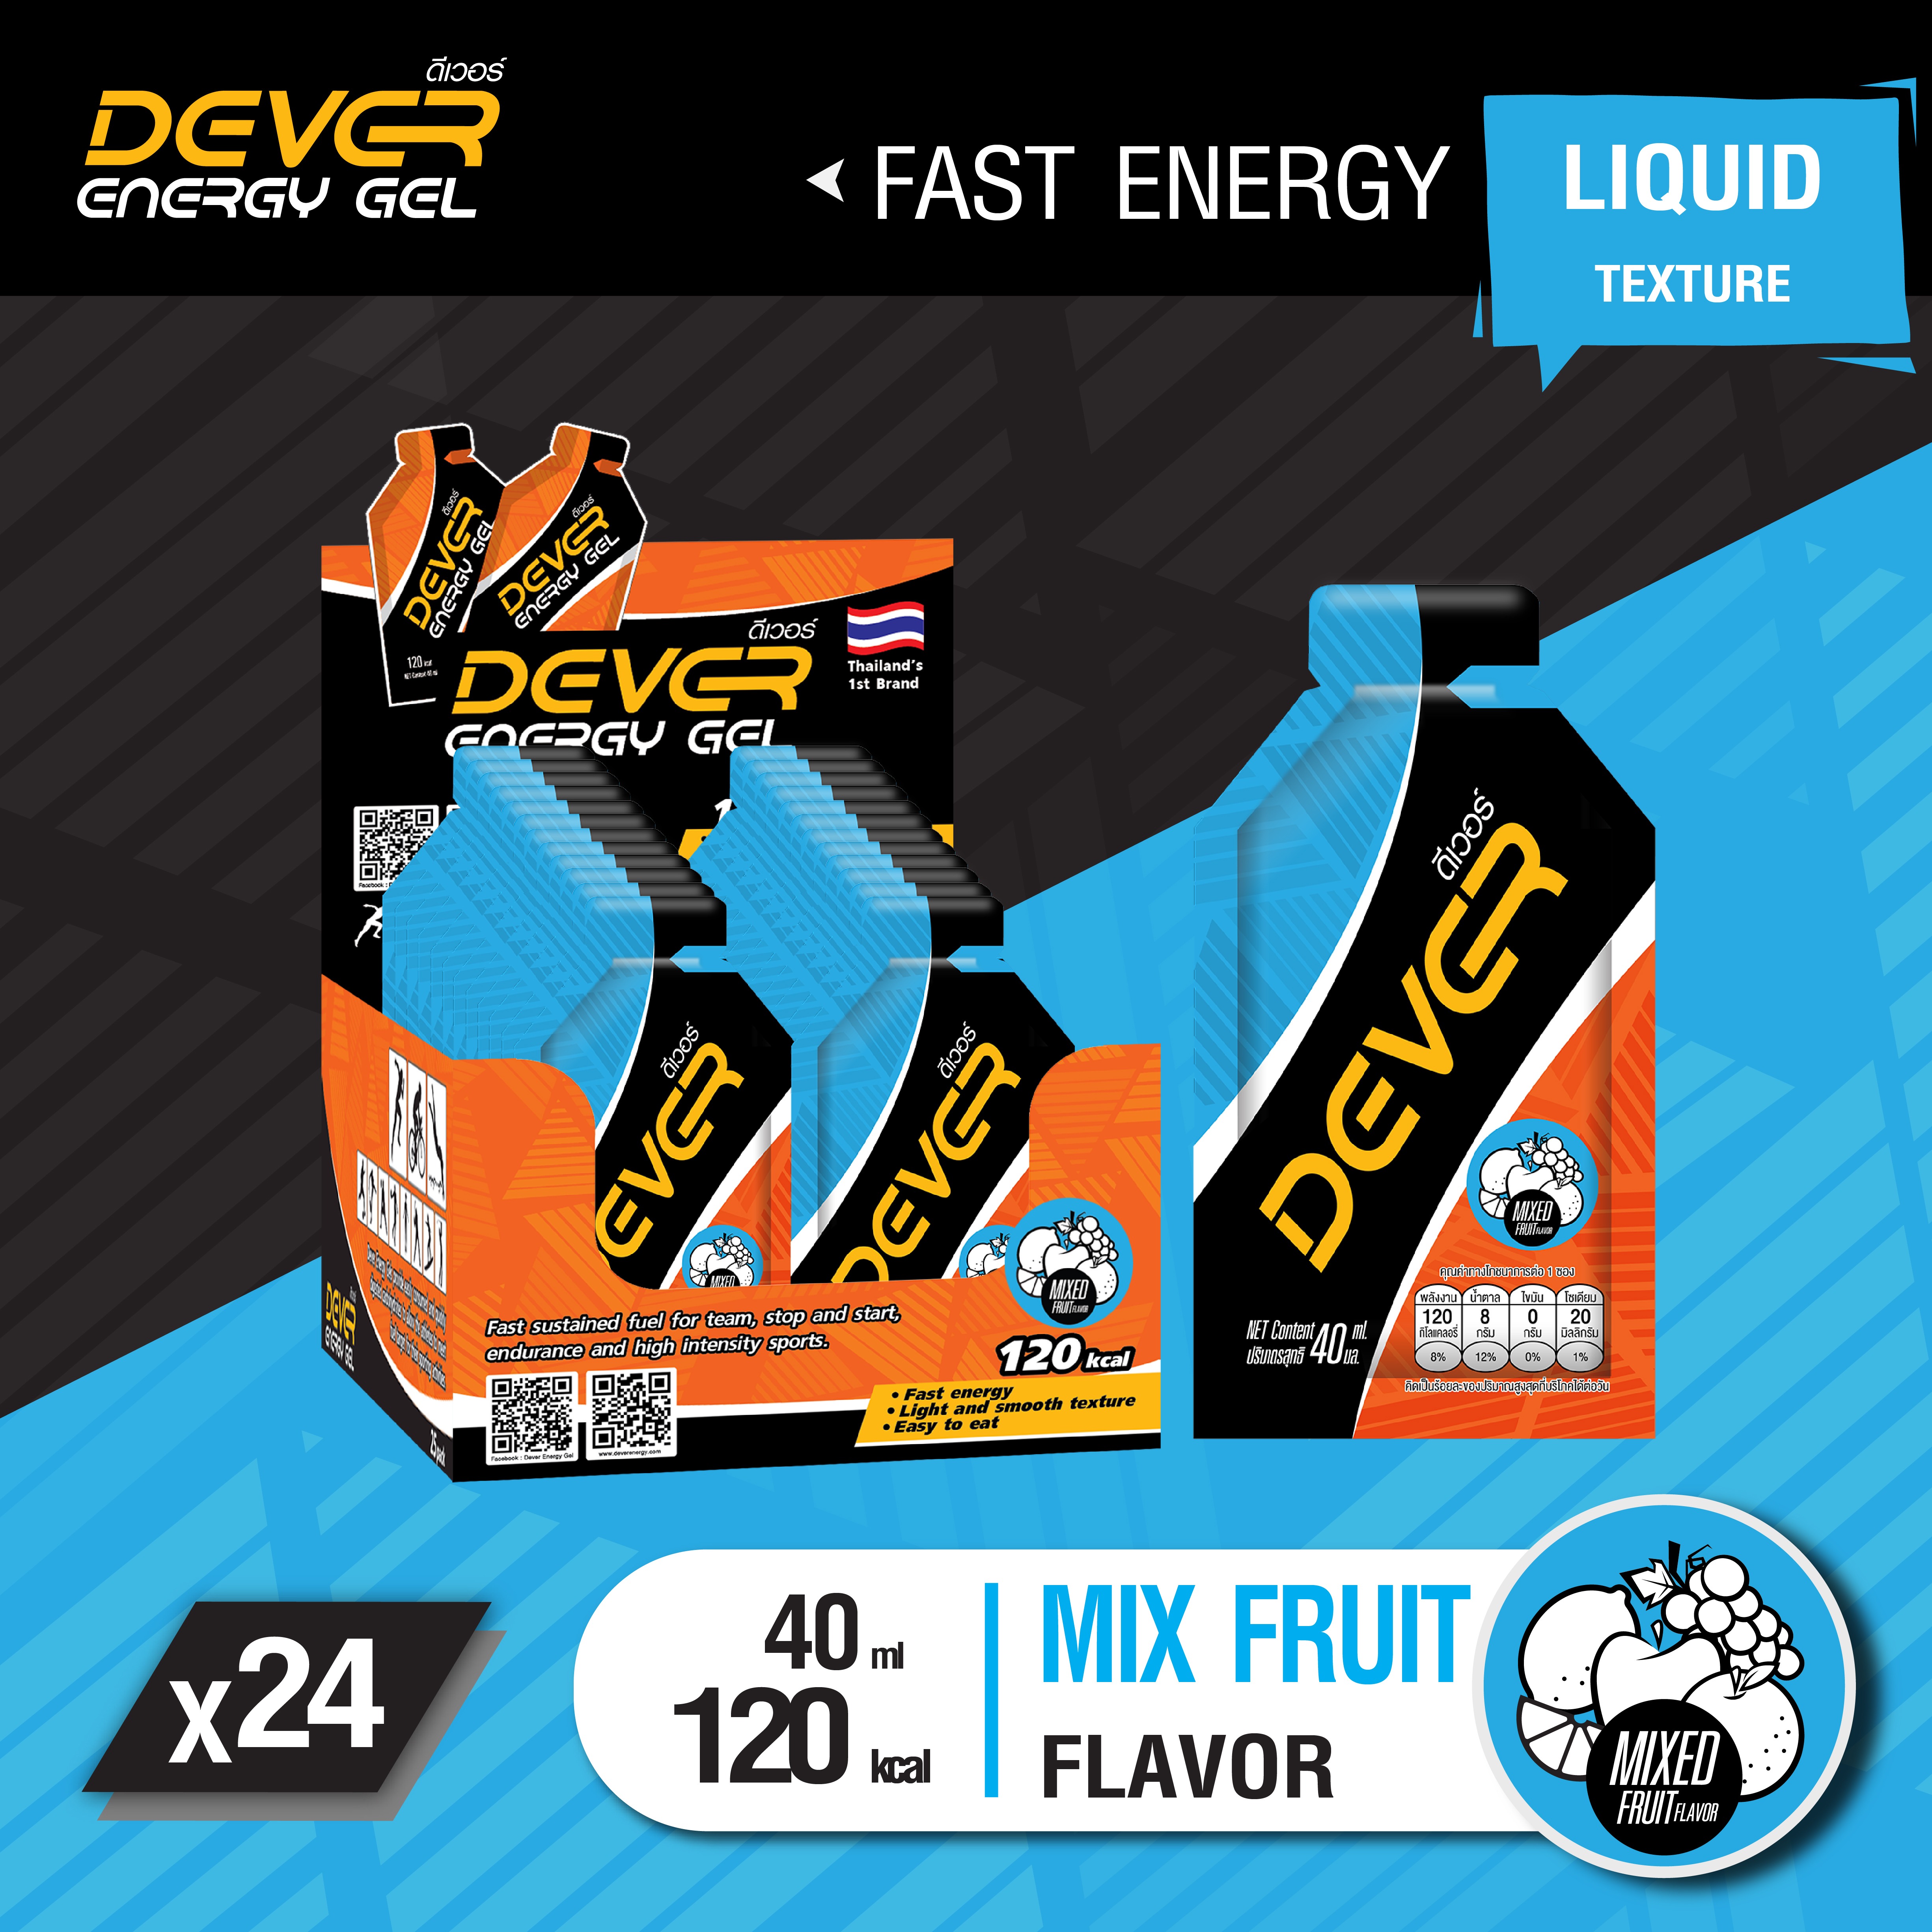 DEVER energy gel (vital source of energy) ดีเวอร์ เจลให้พลังงาน เจลพลังงาน เจลเพิ่มพลังงาน เกลือแร่ สำหรับนักกีฬา นักวิ่ง ออกกำลังกาย > 40 ML ผลไม้รวม 24 ซอง